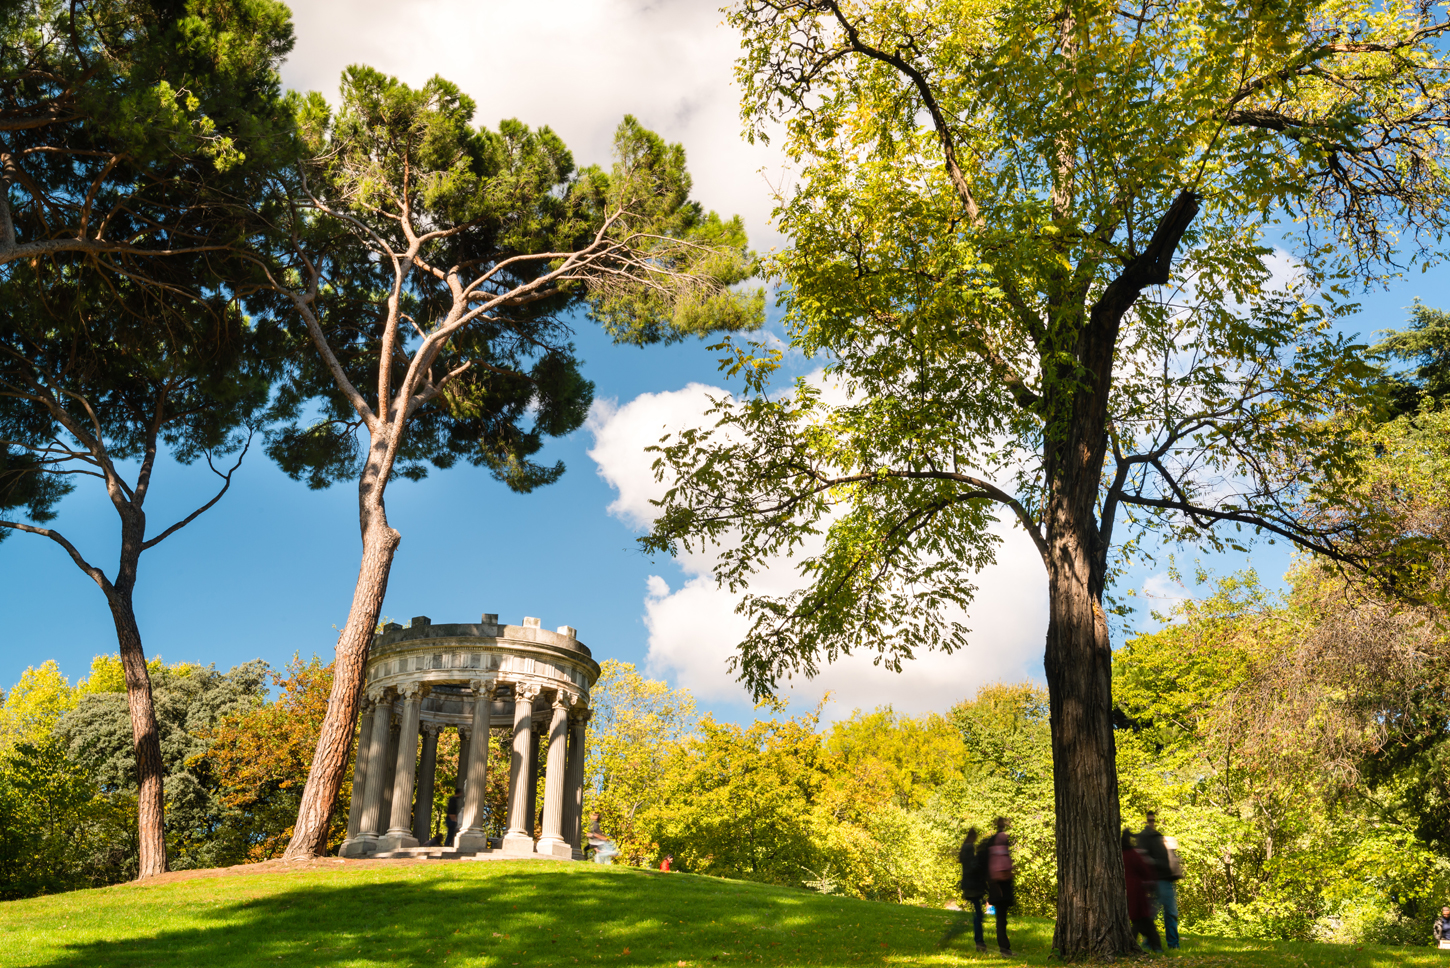 Parque del Retiro: from royal flight of fancy to public park